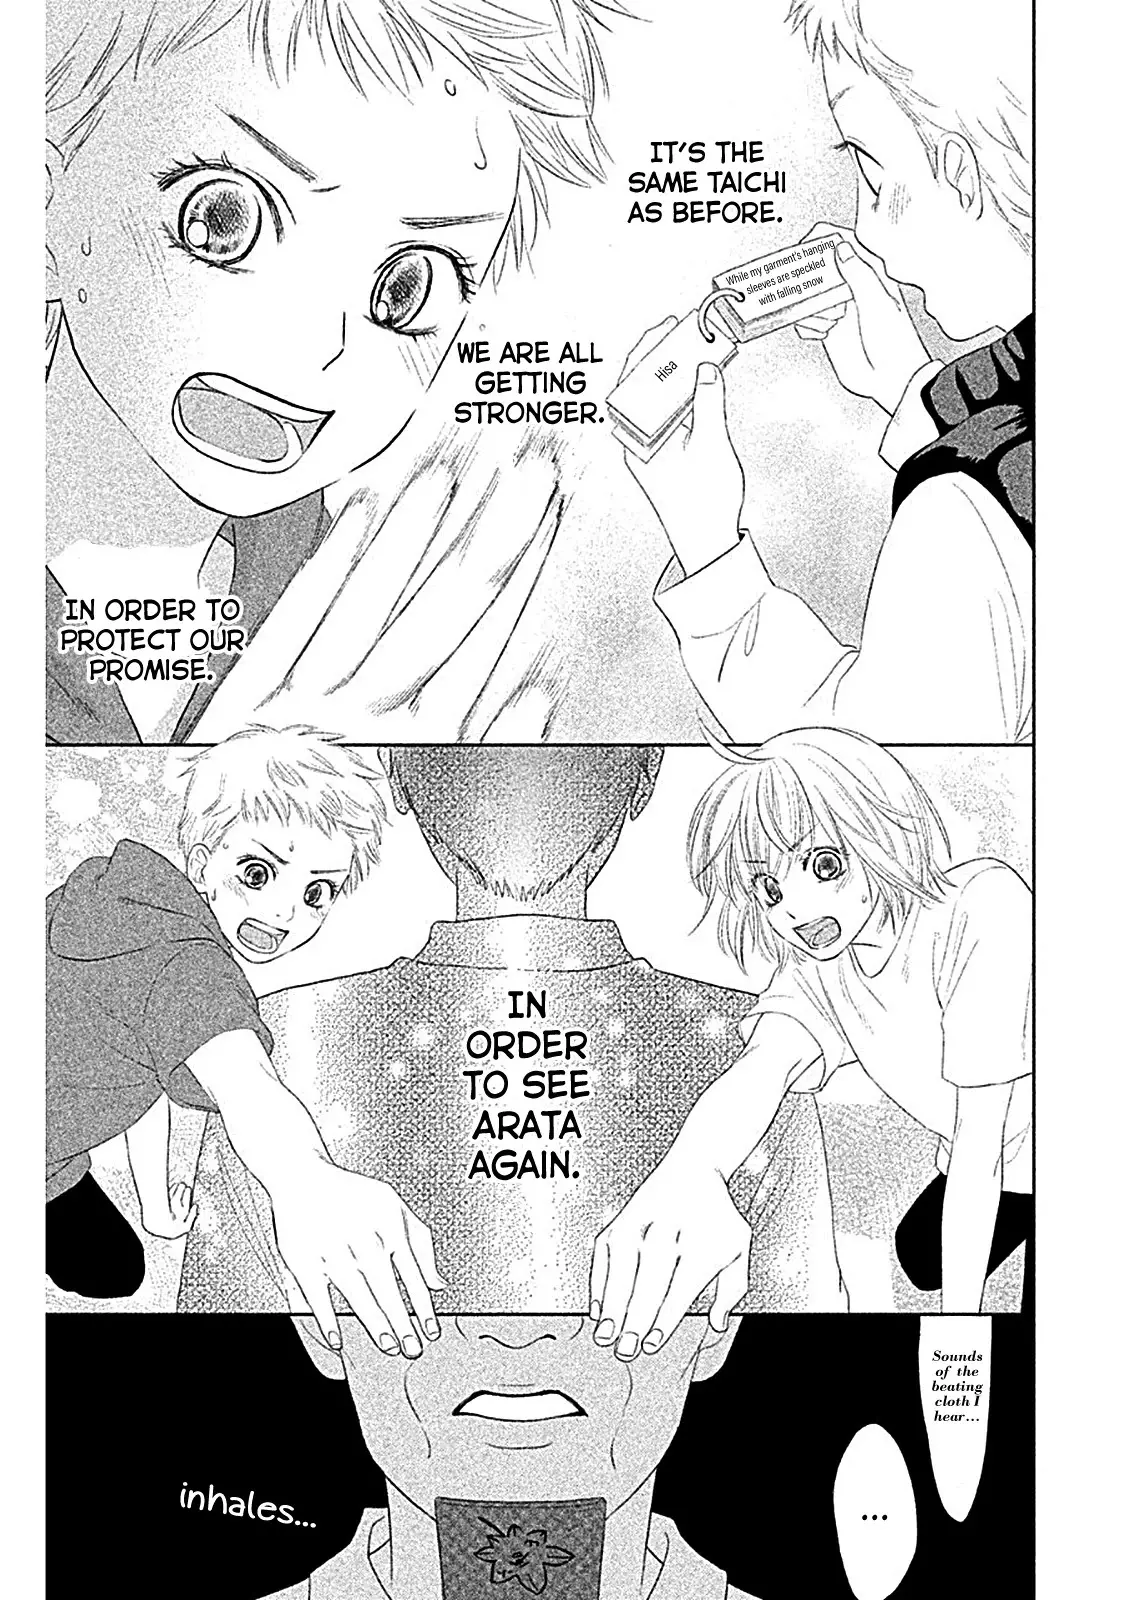 Chihayafuru: Middle School Arc - 1 page 25